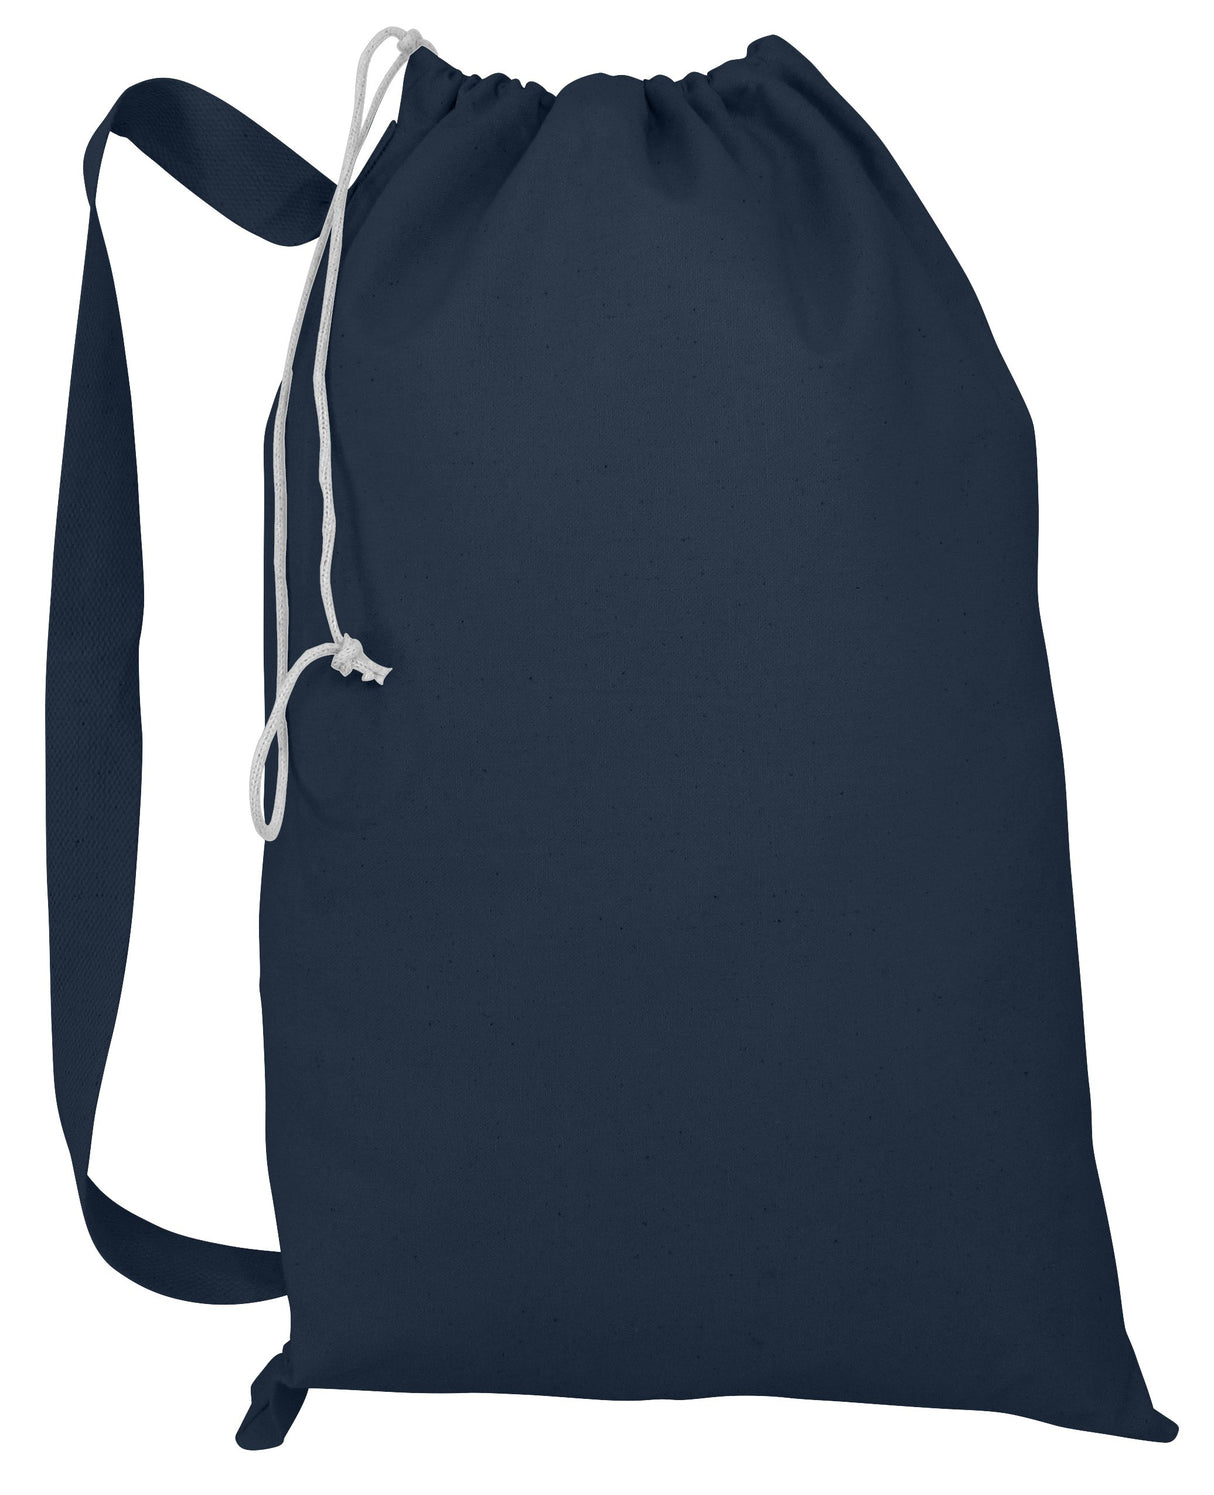 Laundry Bag Thicken Oversized Drawstring Packing Bag, Travel Garment Bags